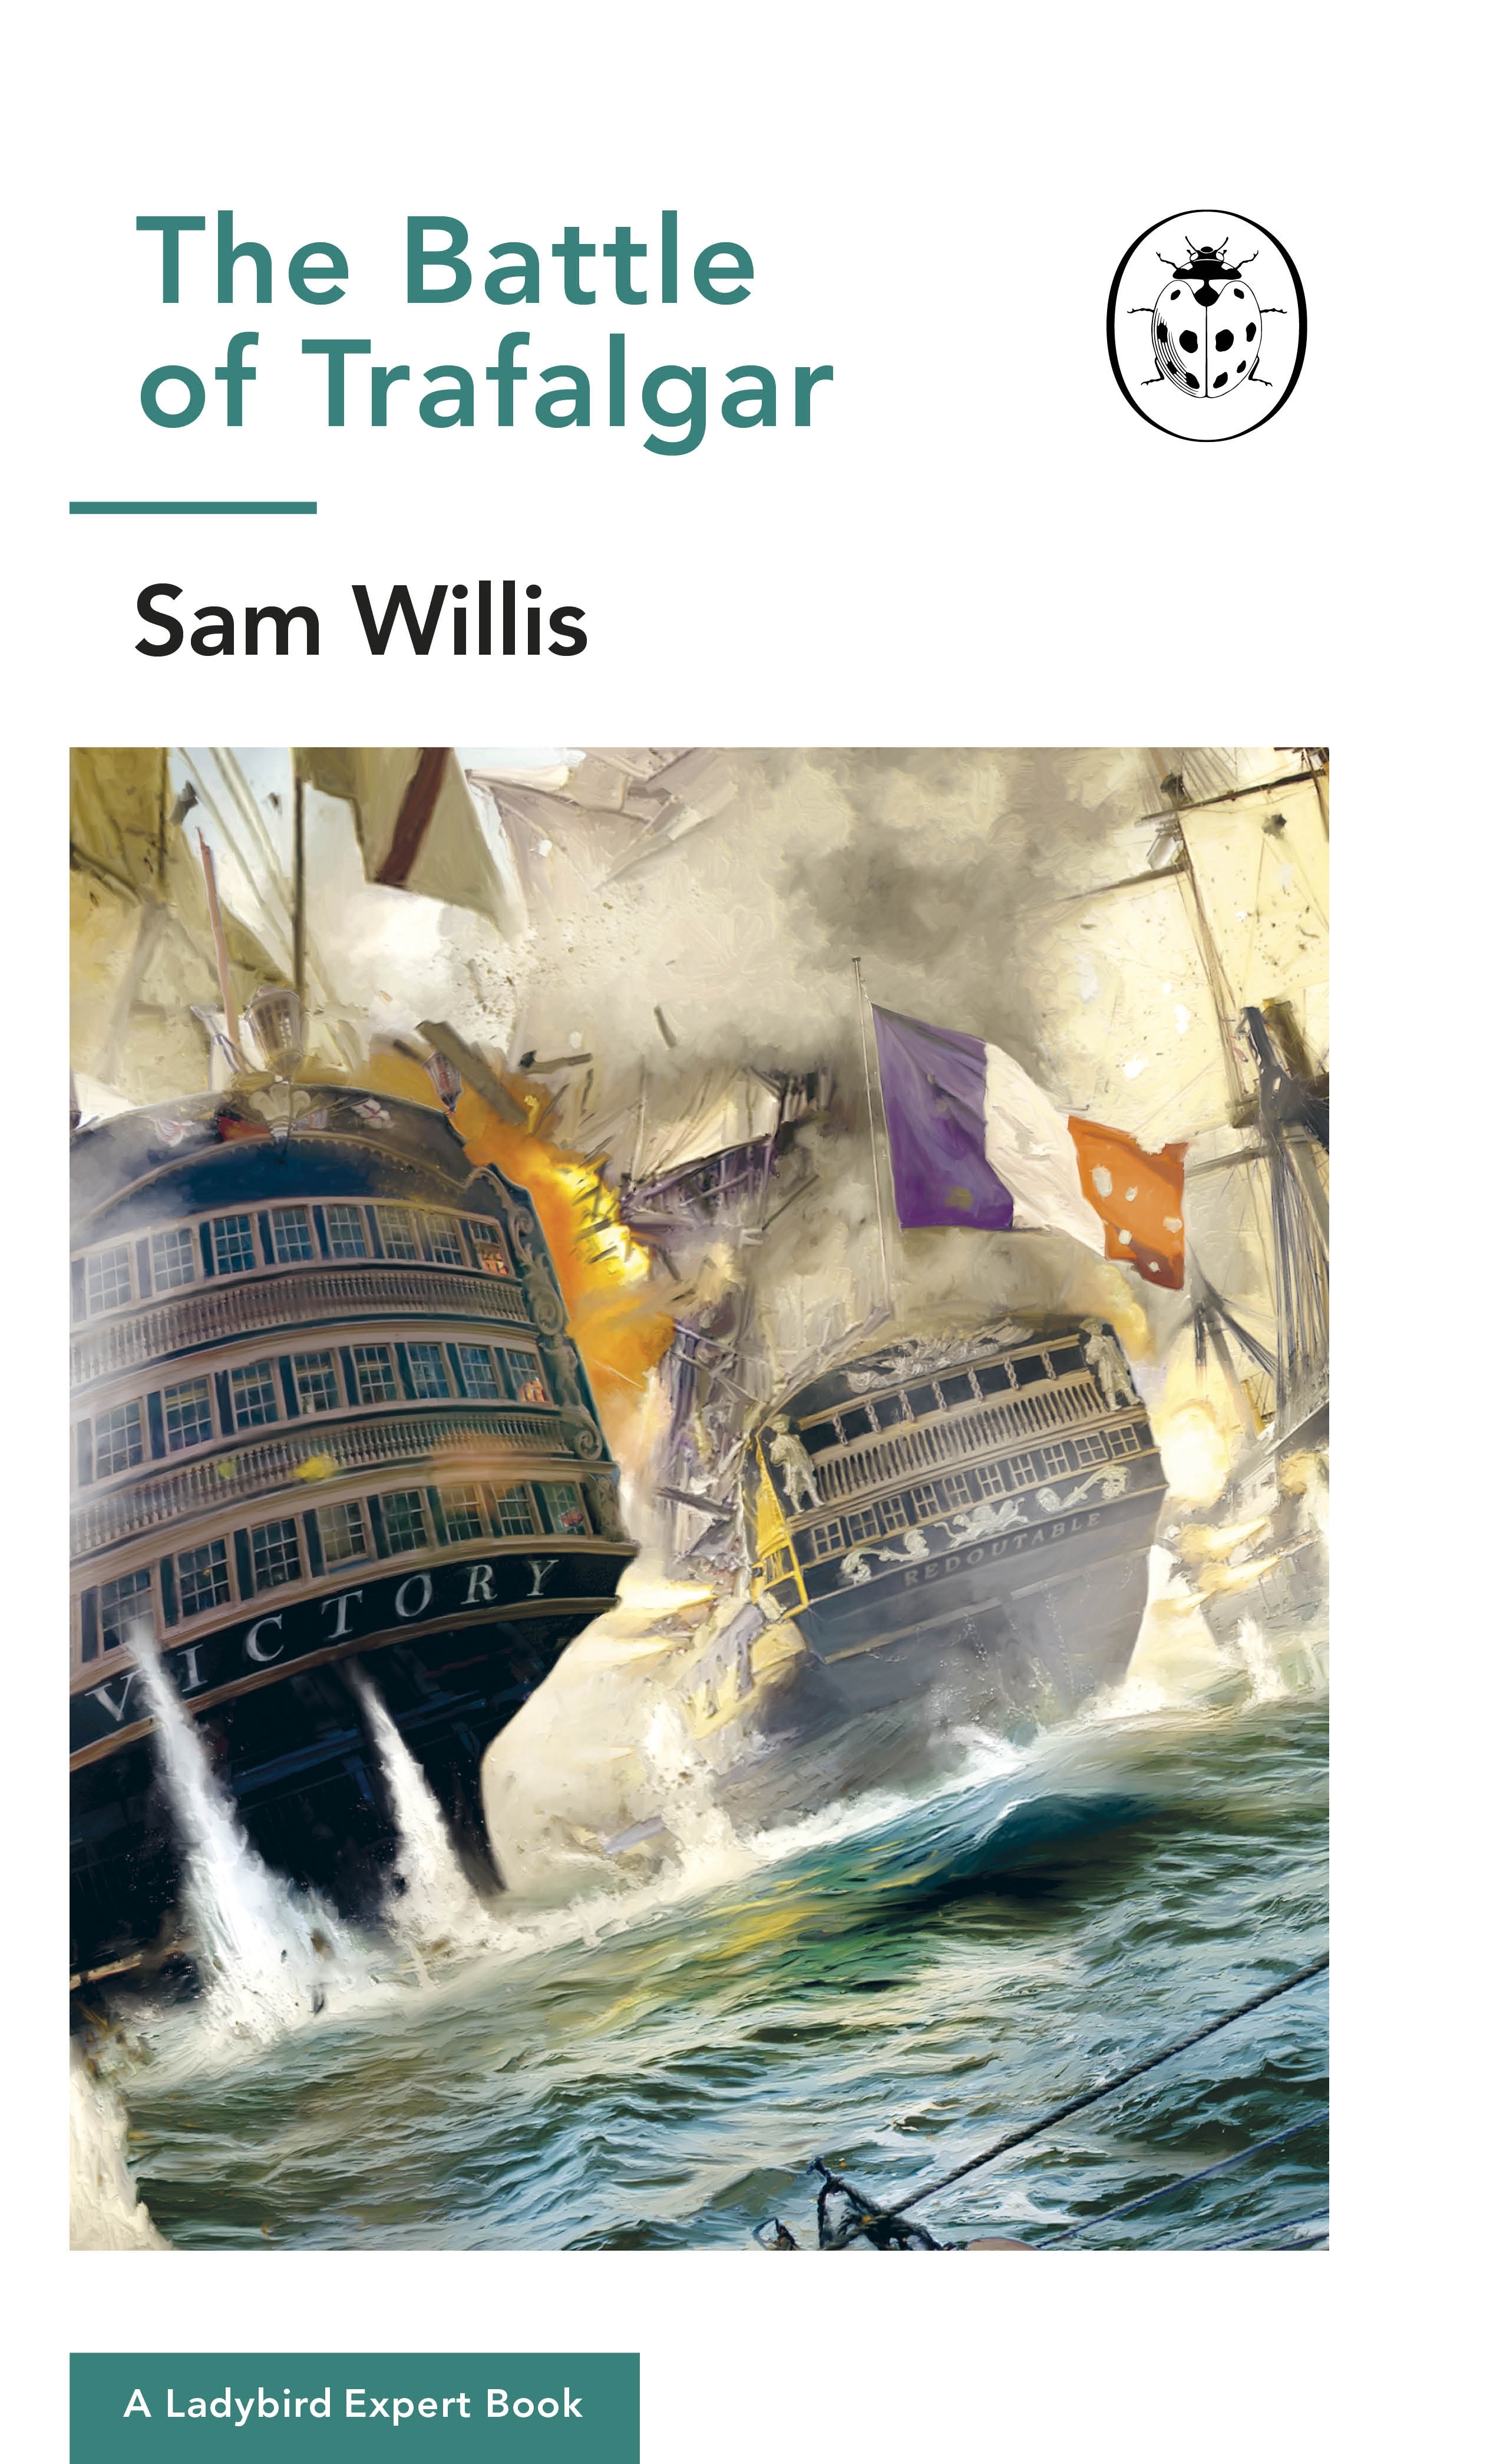 Book “Battle of Trafalgar” by Sam Willis — June 27, 2019